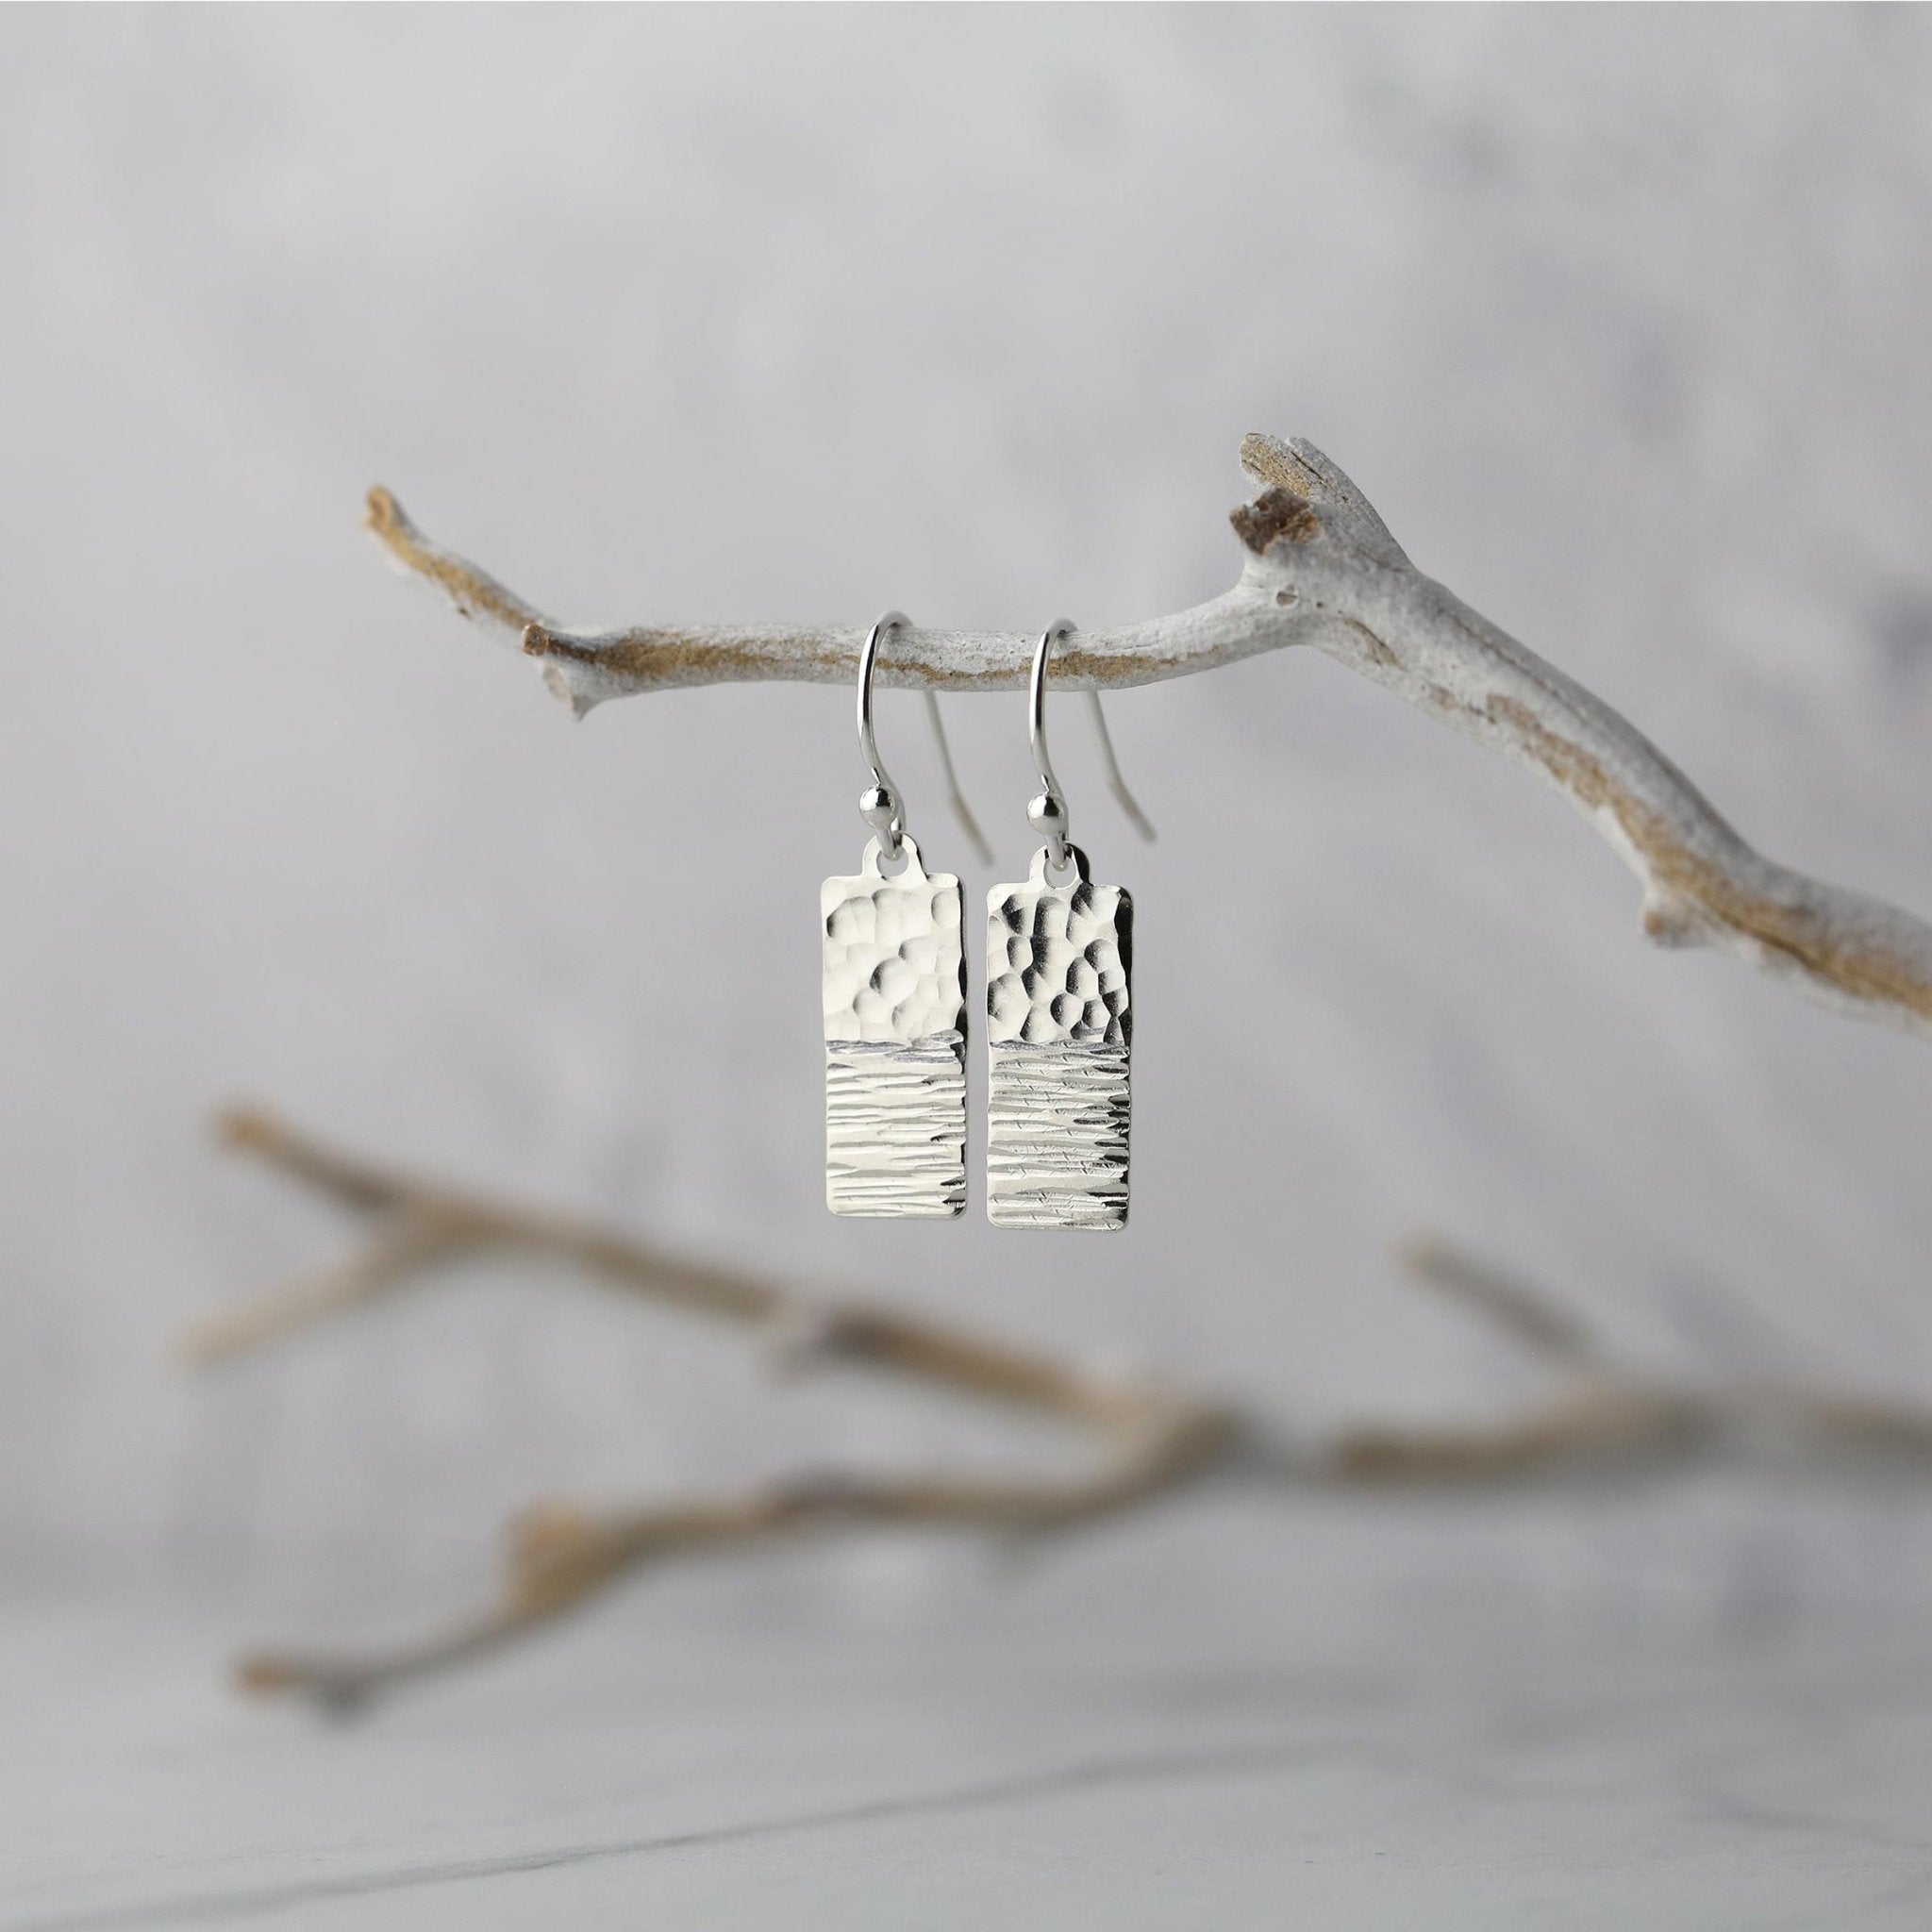 Duo Textured Silver Rectangular Earrings handmade by Burnish